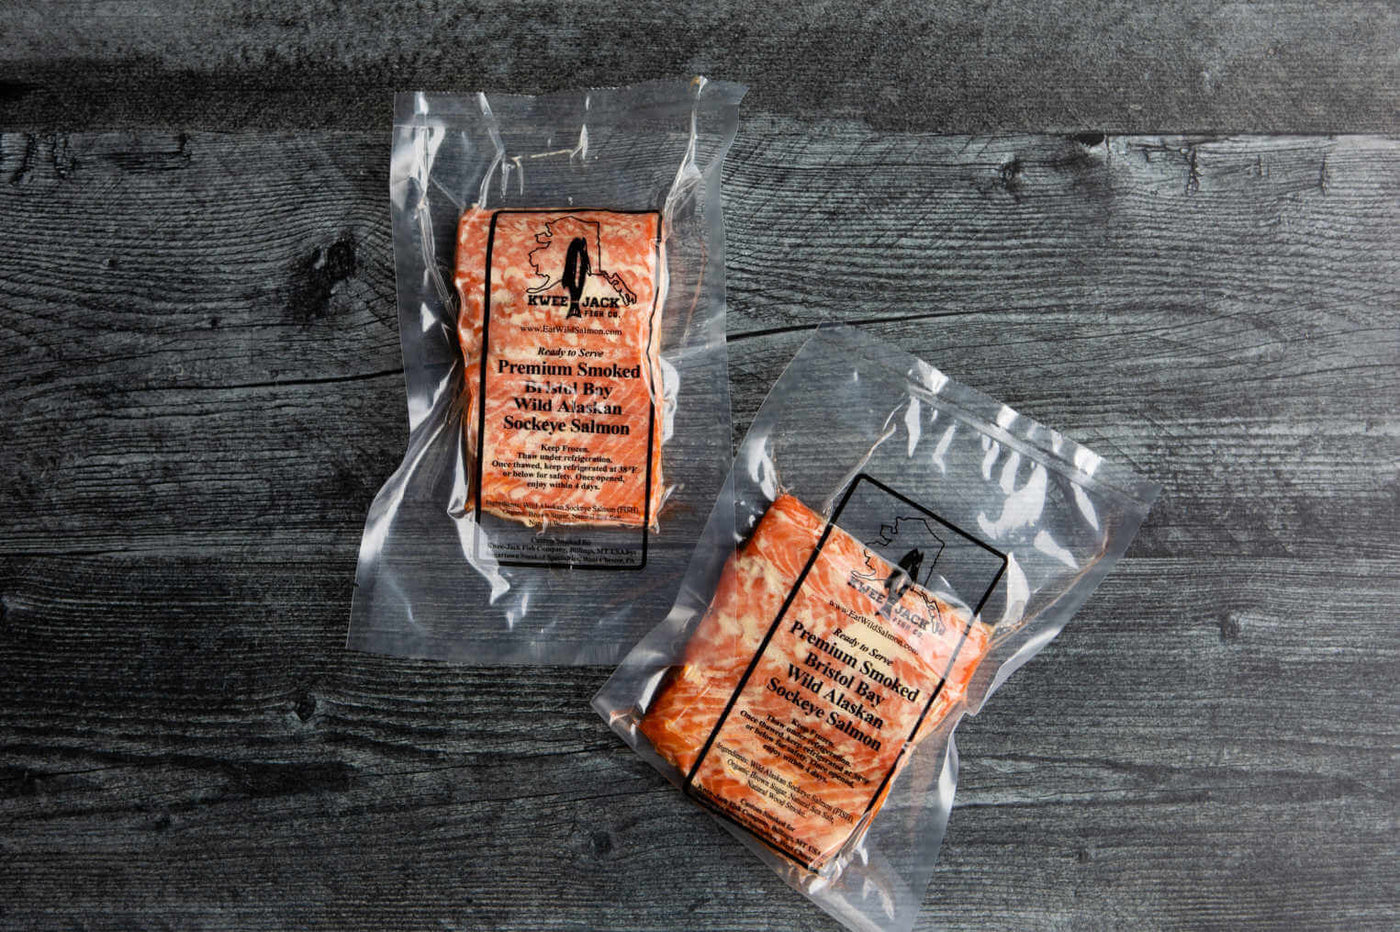 Kwee-Jack Fish Co. Wild Caught Alaskan Traditional Smoked Salmon in vacuum packaging.